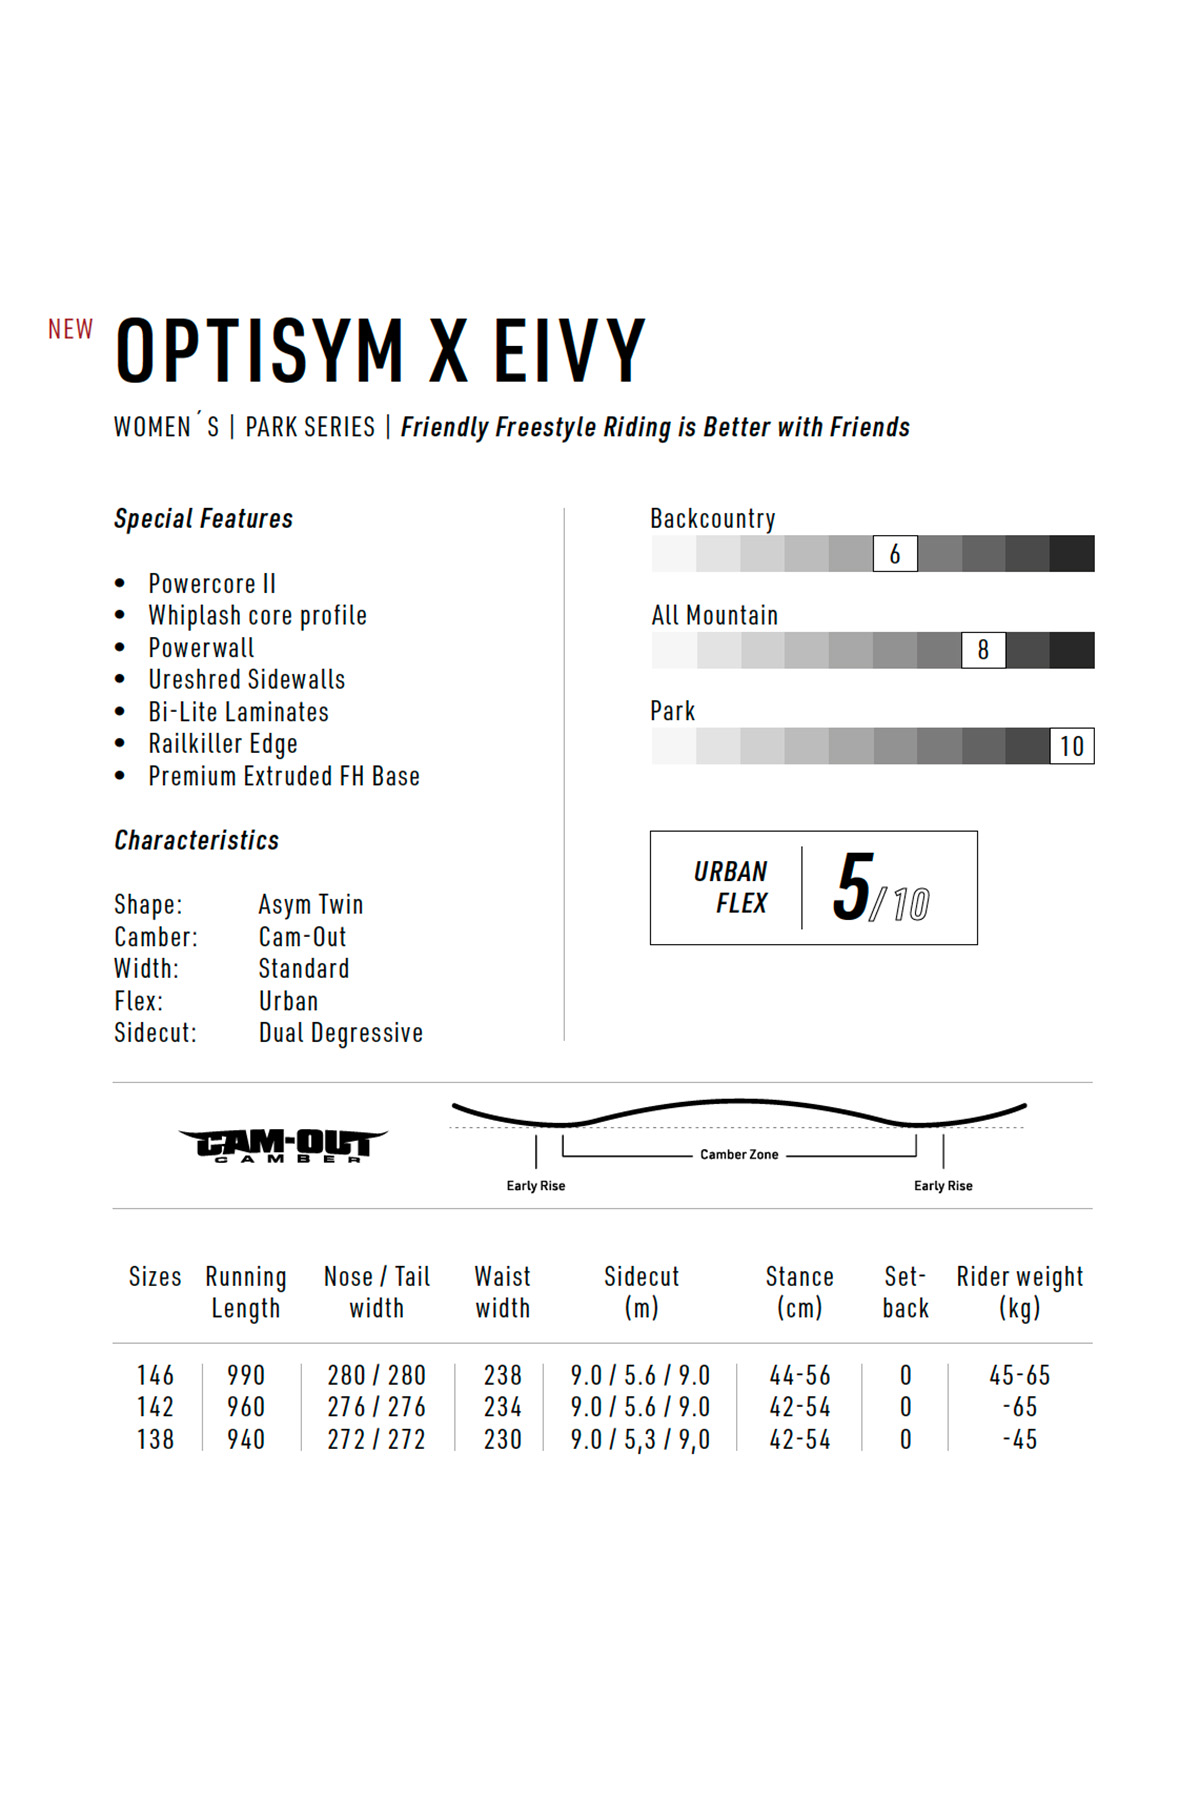 Nitro x Eivy - Optisym size guide